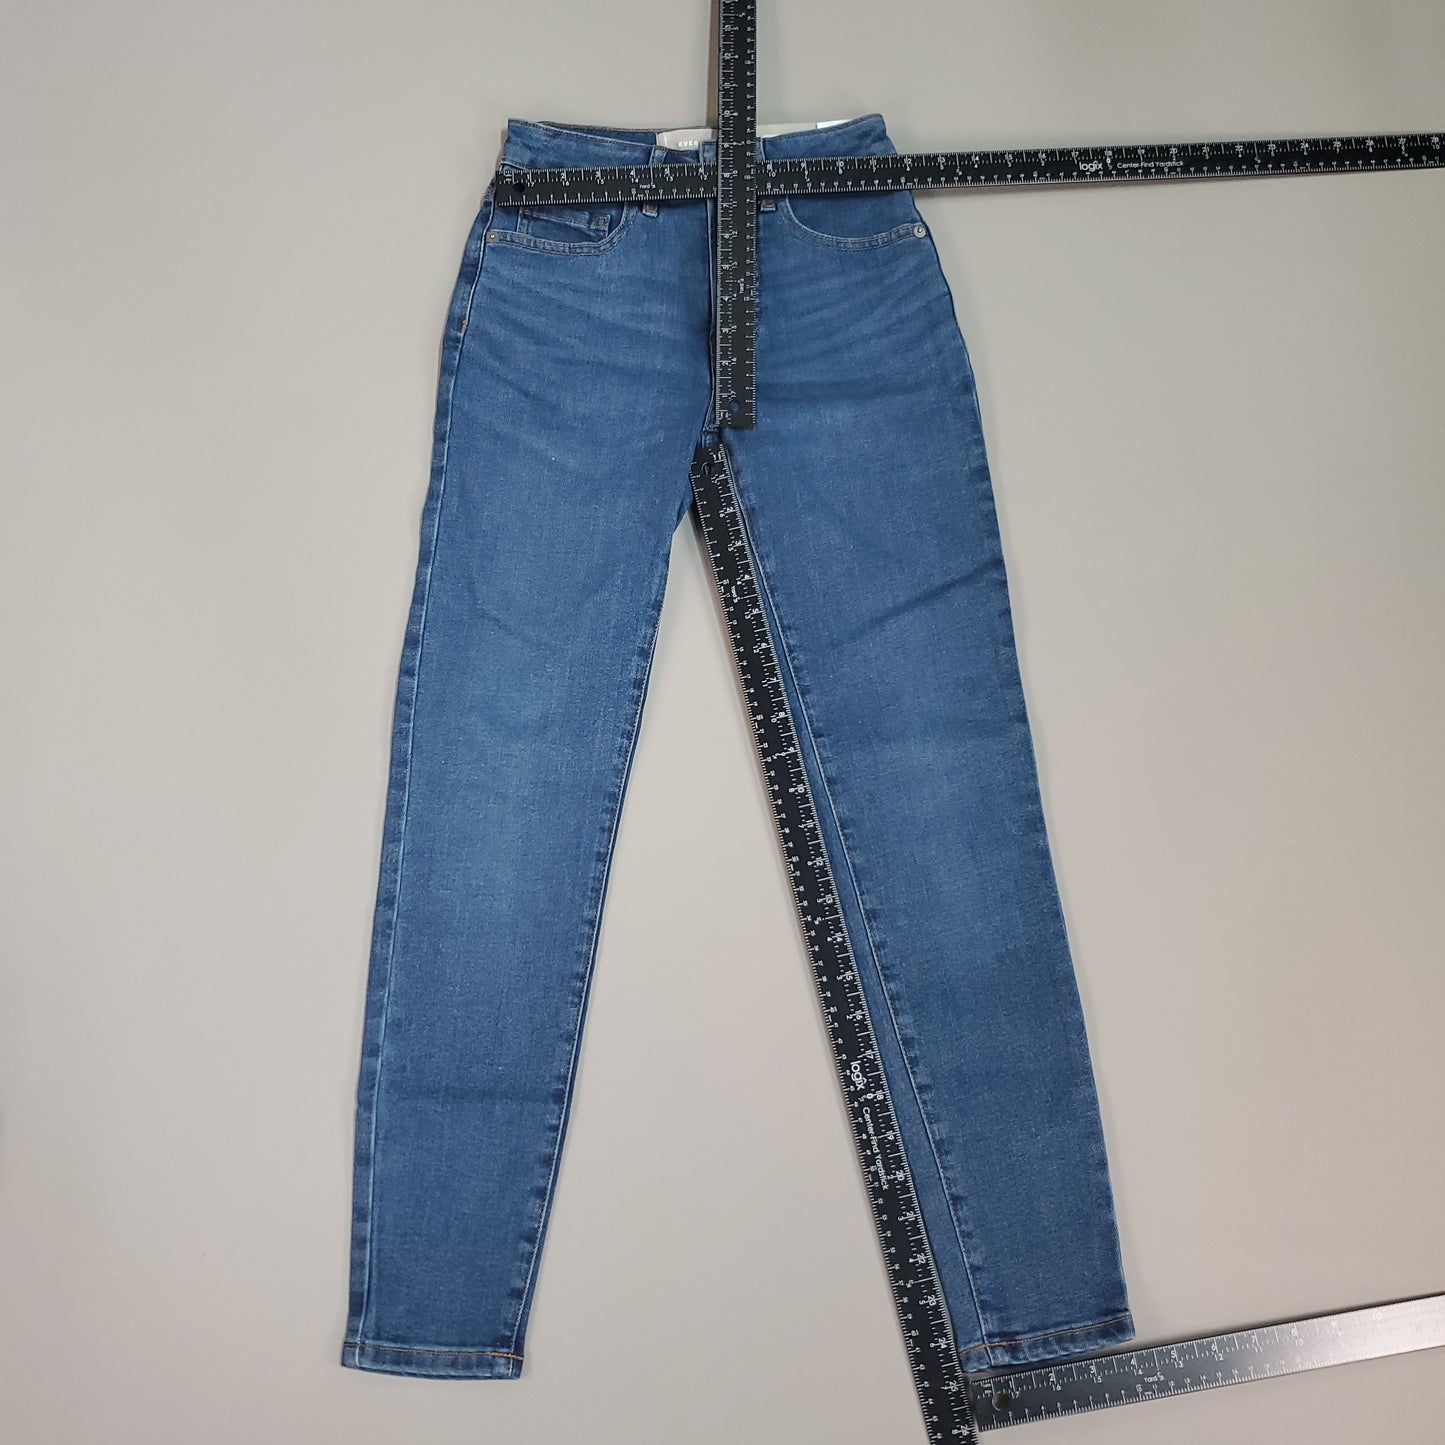 EVERLANE Curvy High-Rise Skinny Jean Pants Women's Sz 23 Ankle Denim Blue (New)